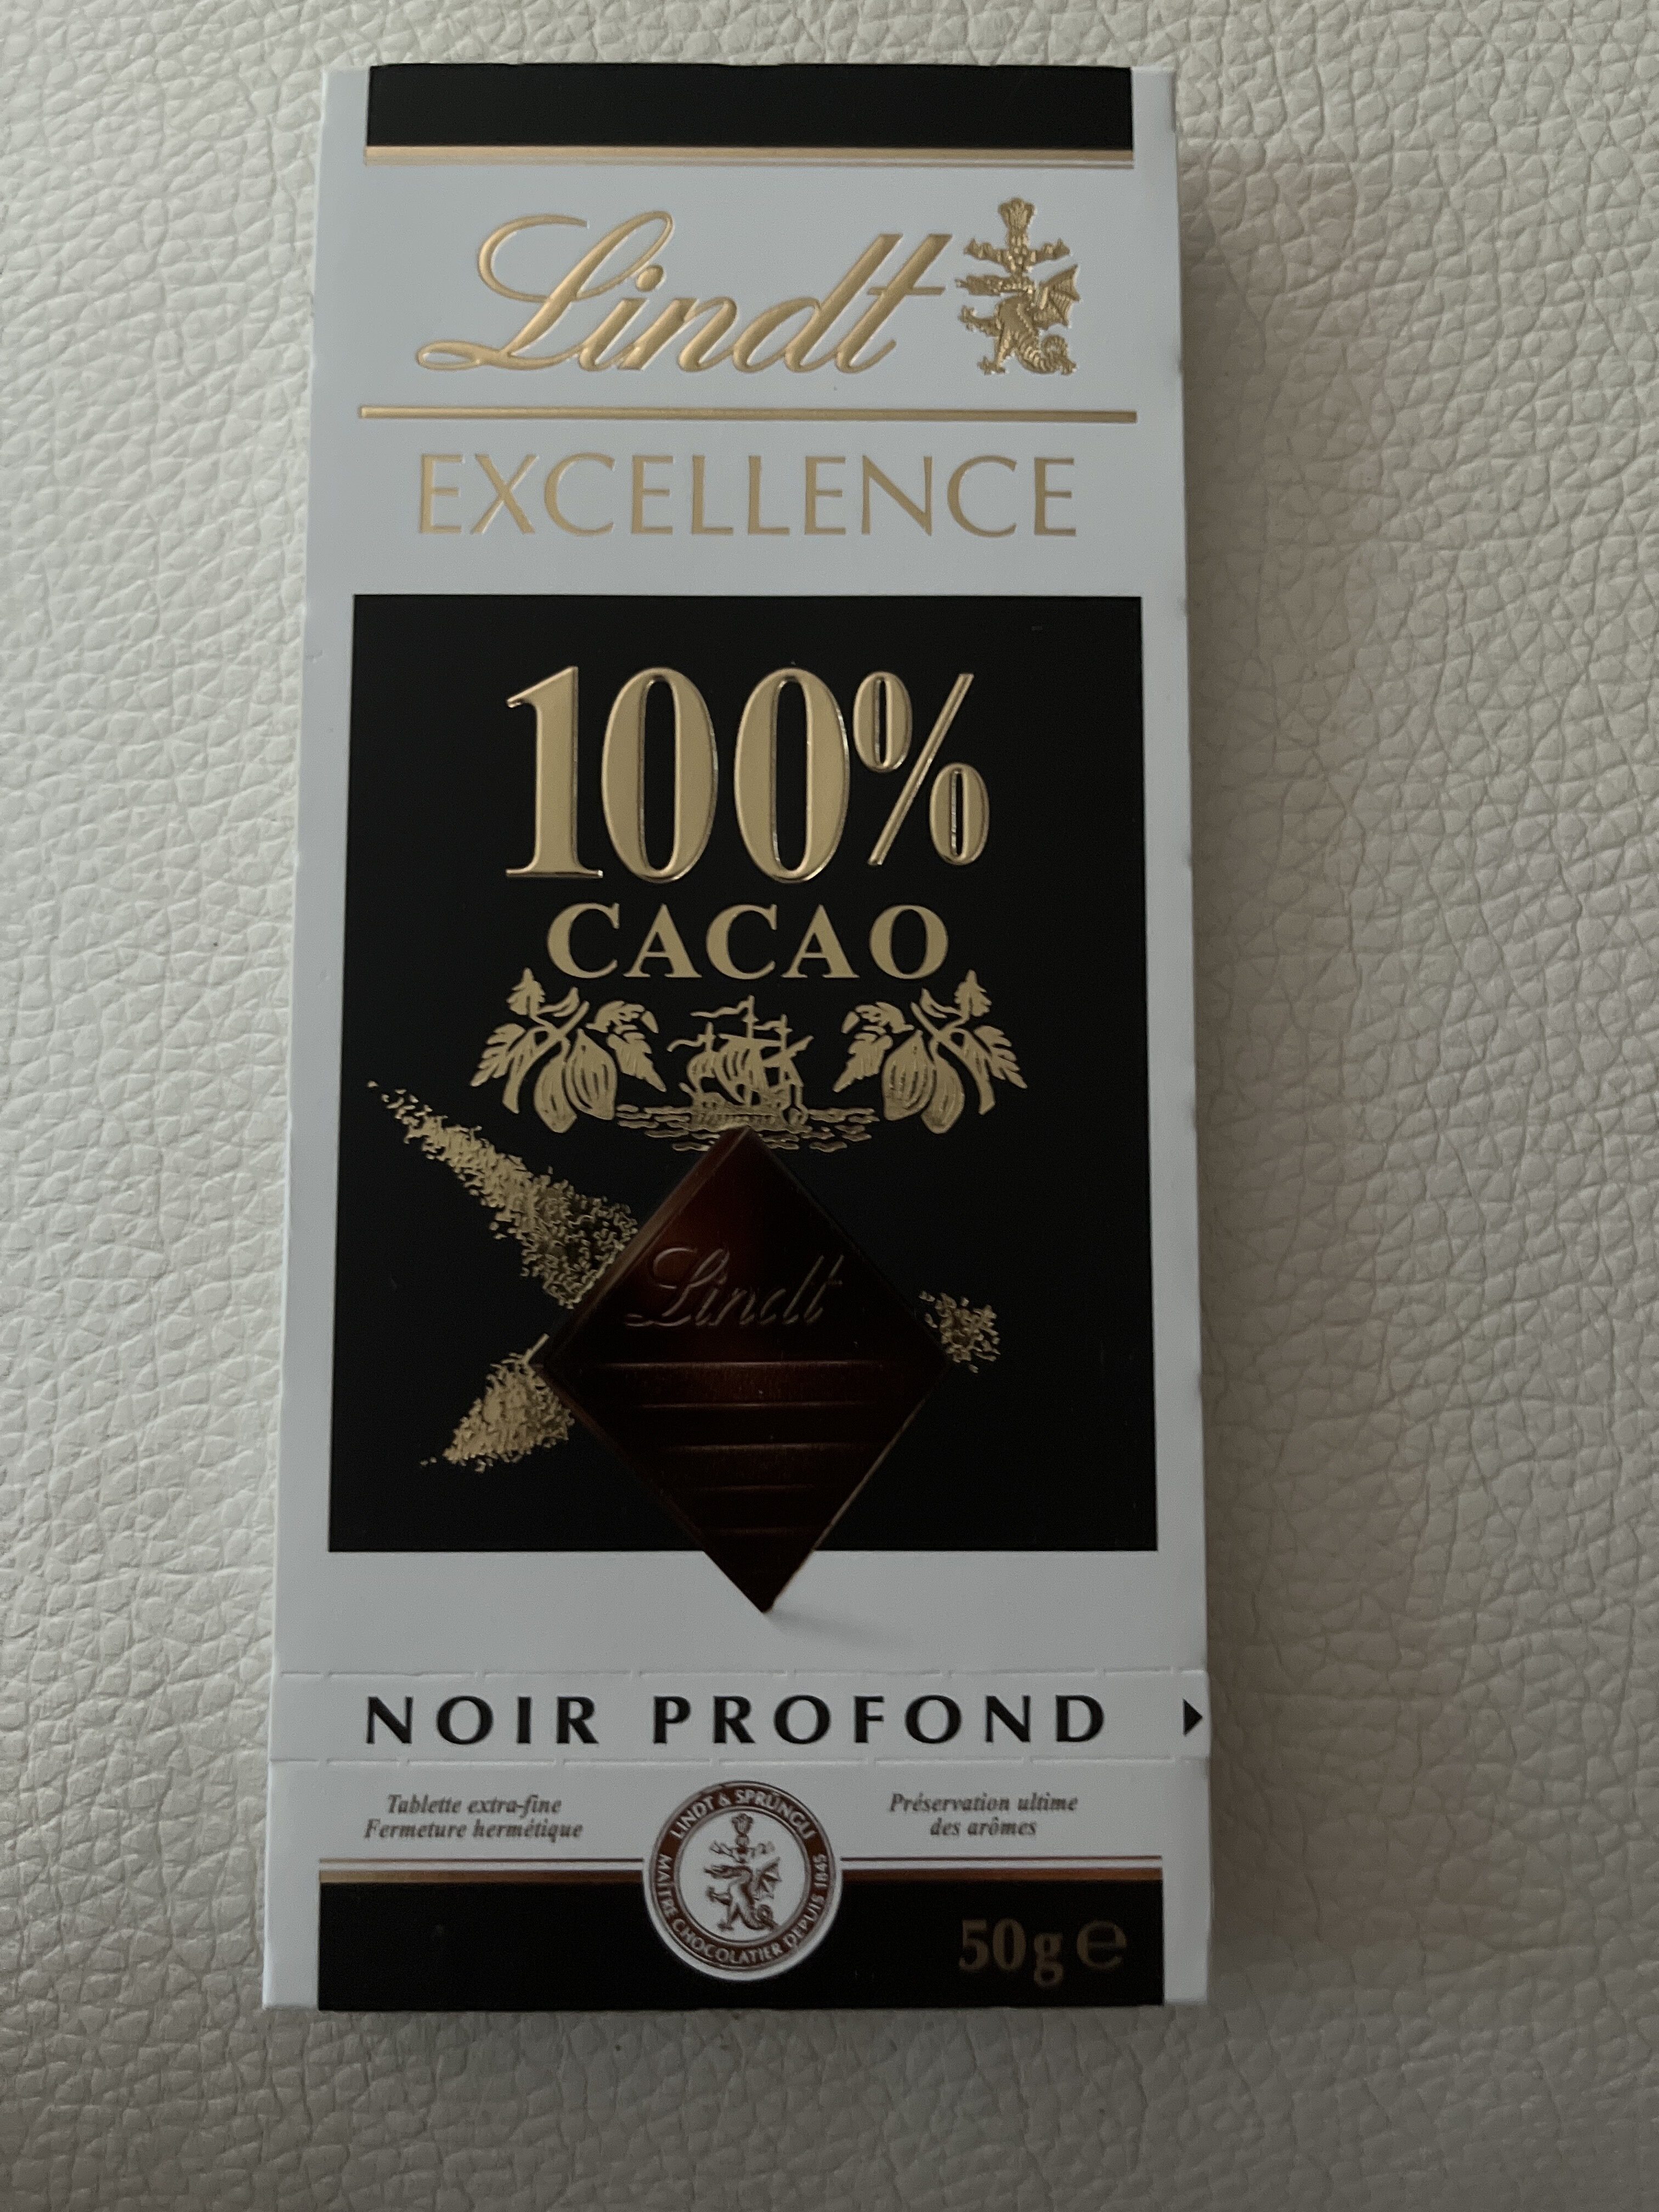 Excellence 100% cacao noir infini - Produkt - fr